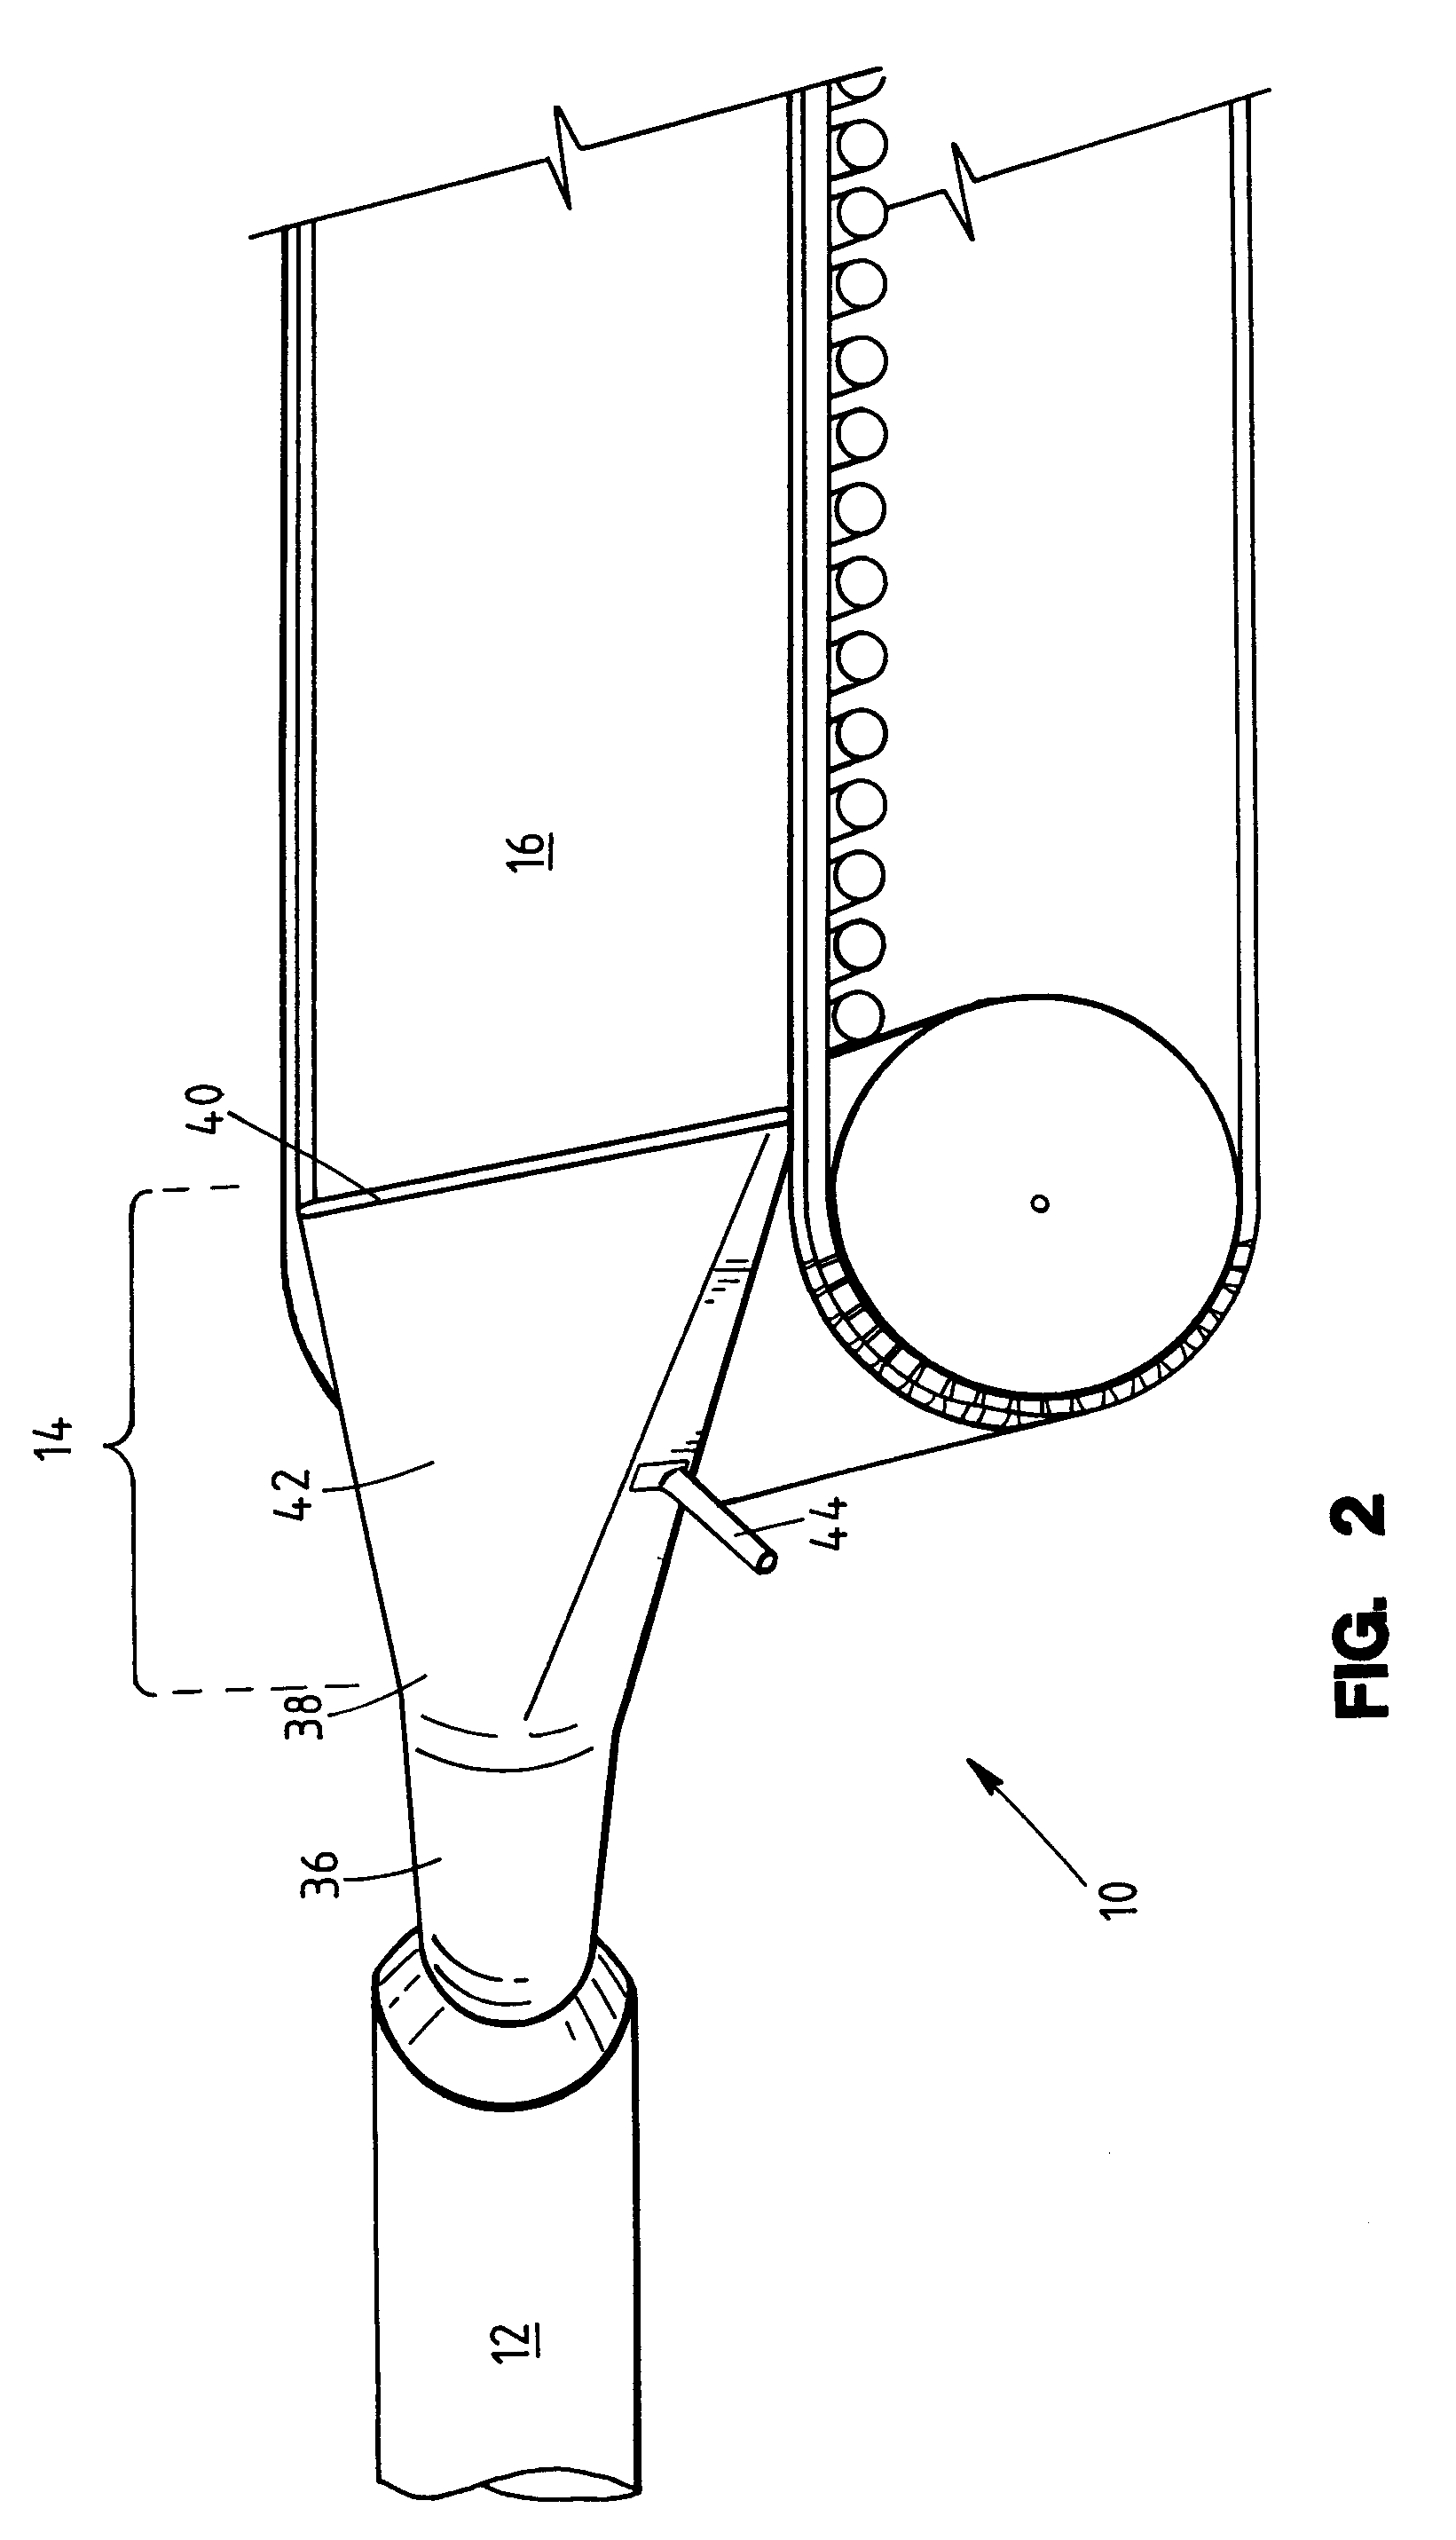 Apparatus for preparing a gypsum wallboard core